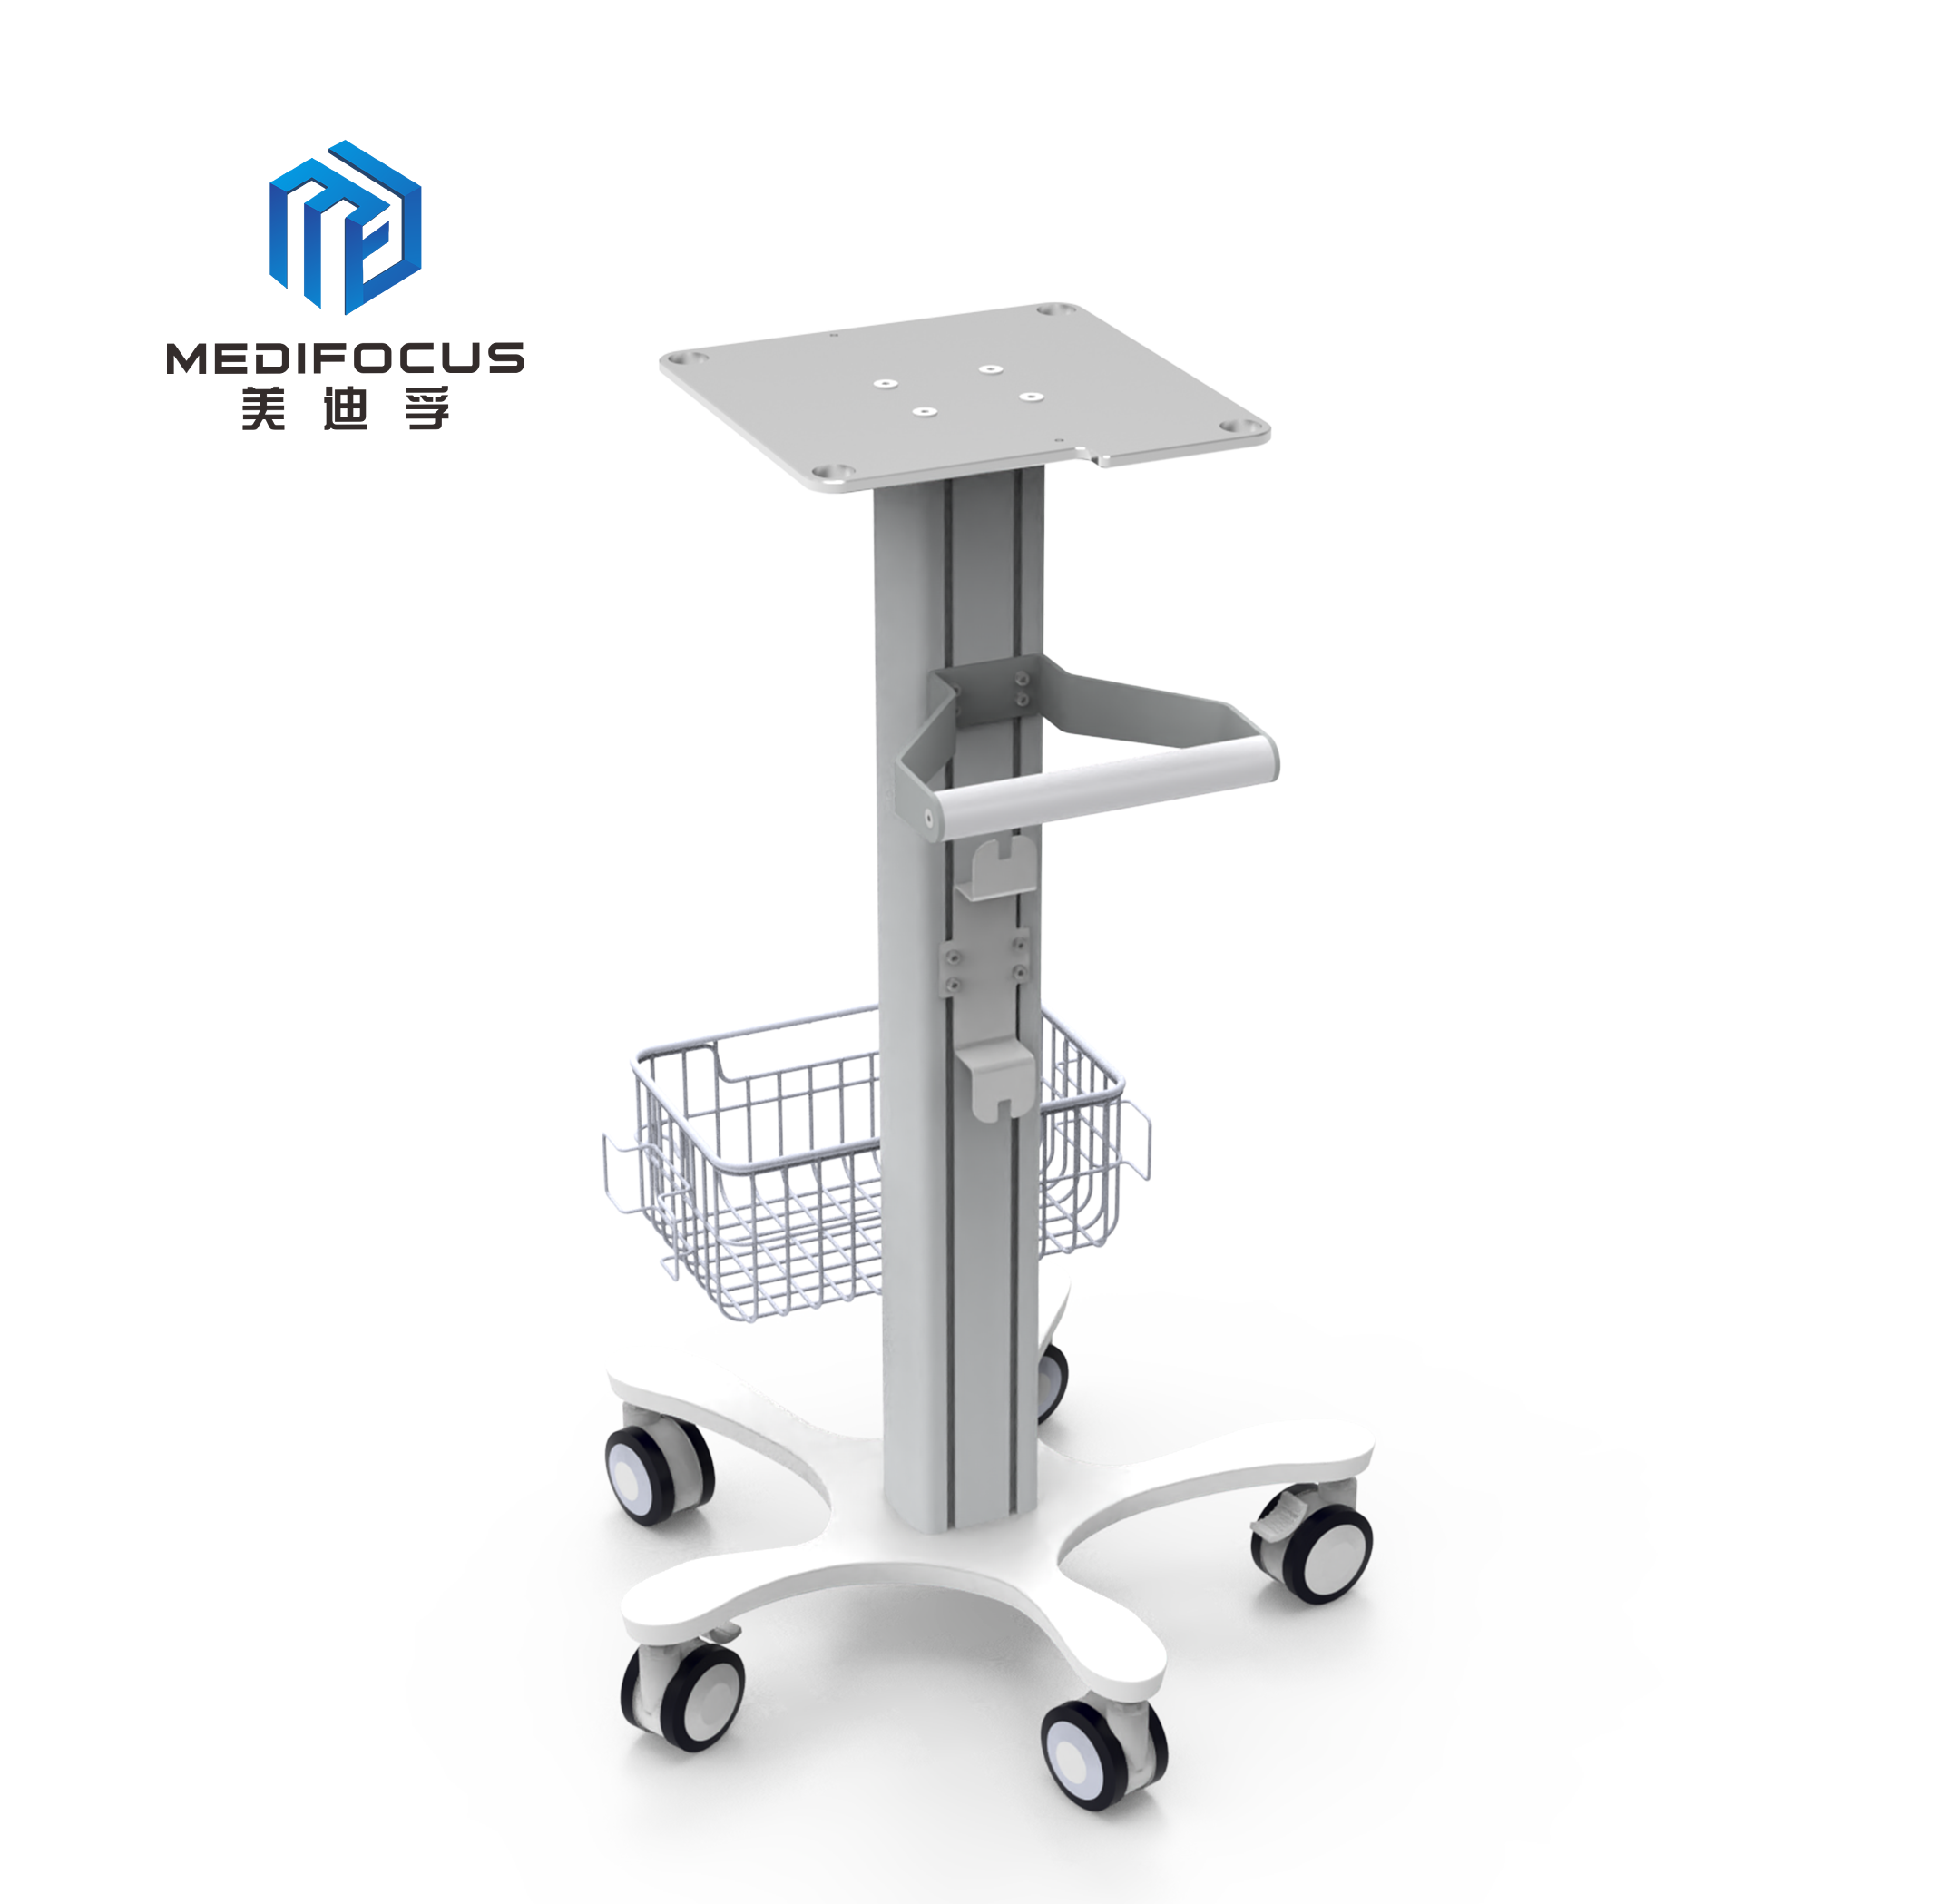 Ventilator Trolley B05 MeiDunLi E360 ventilator Medical trolley cart factory outlet OEM acceptable